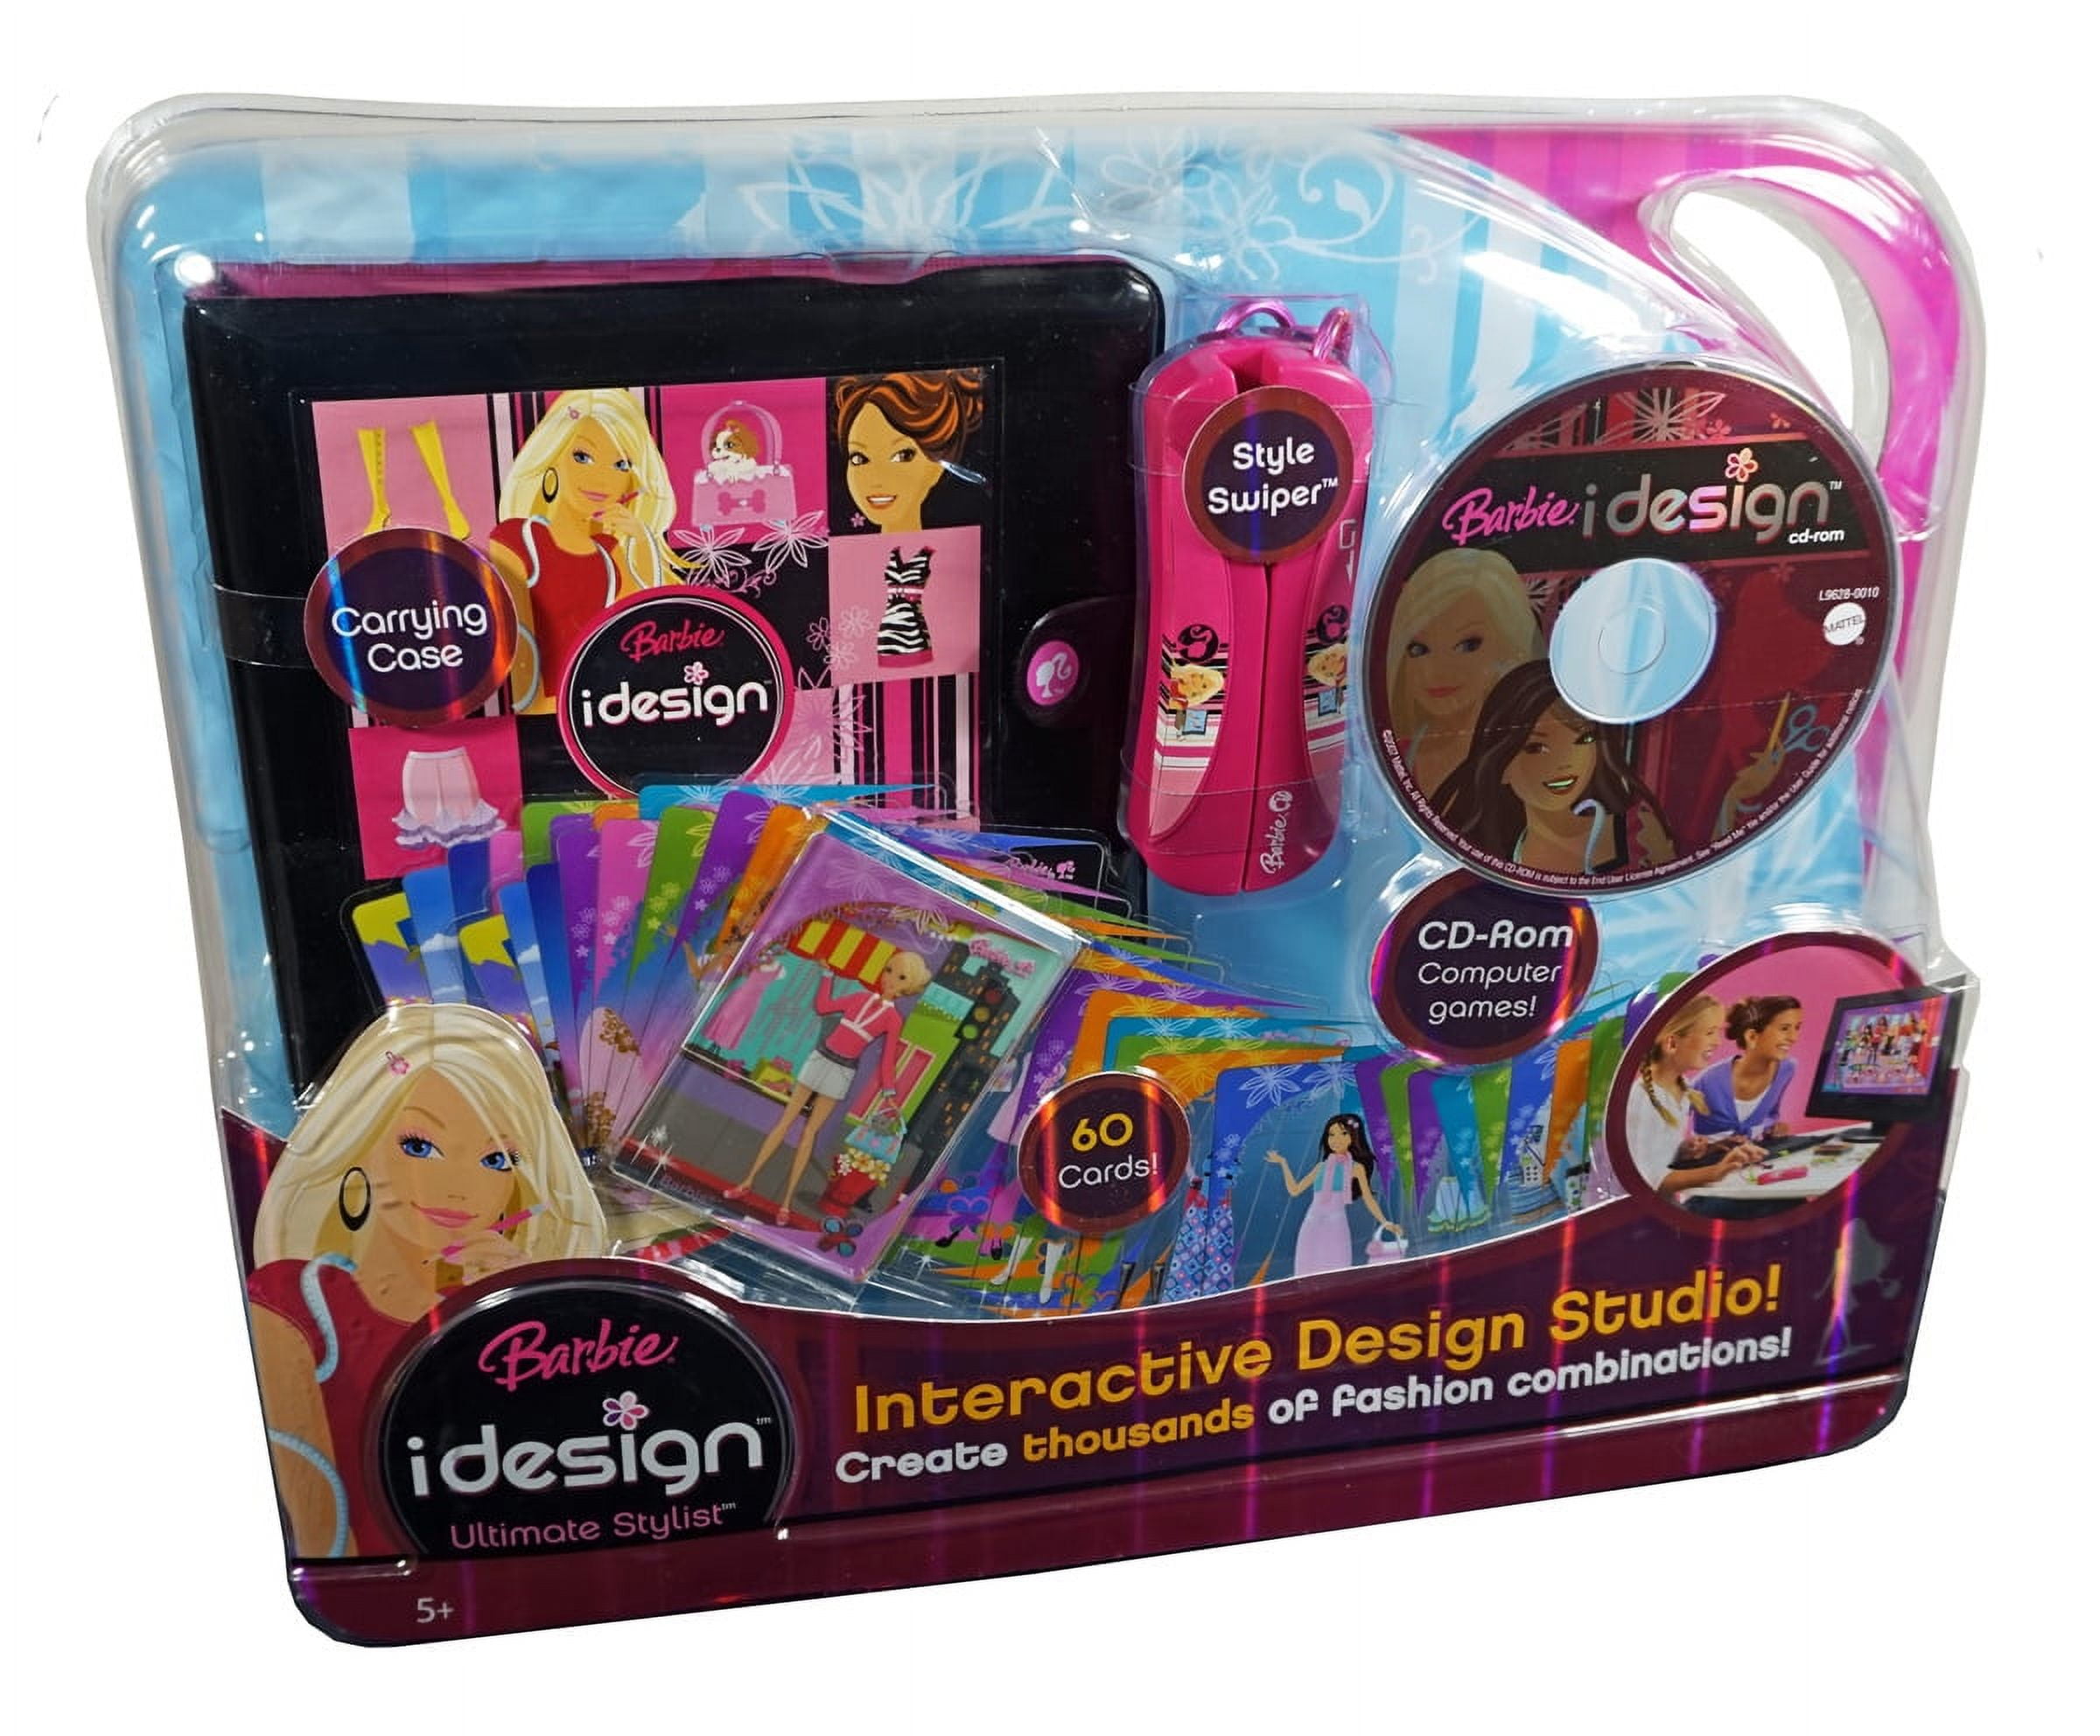  Barbie iDesign Slide 2 Style Sorter : Toys & Games